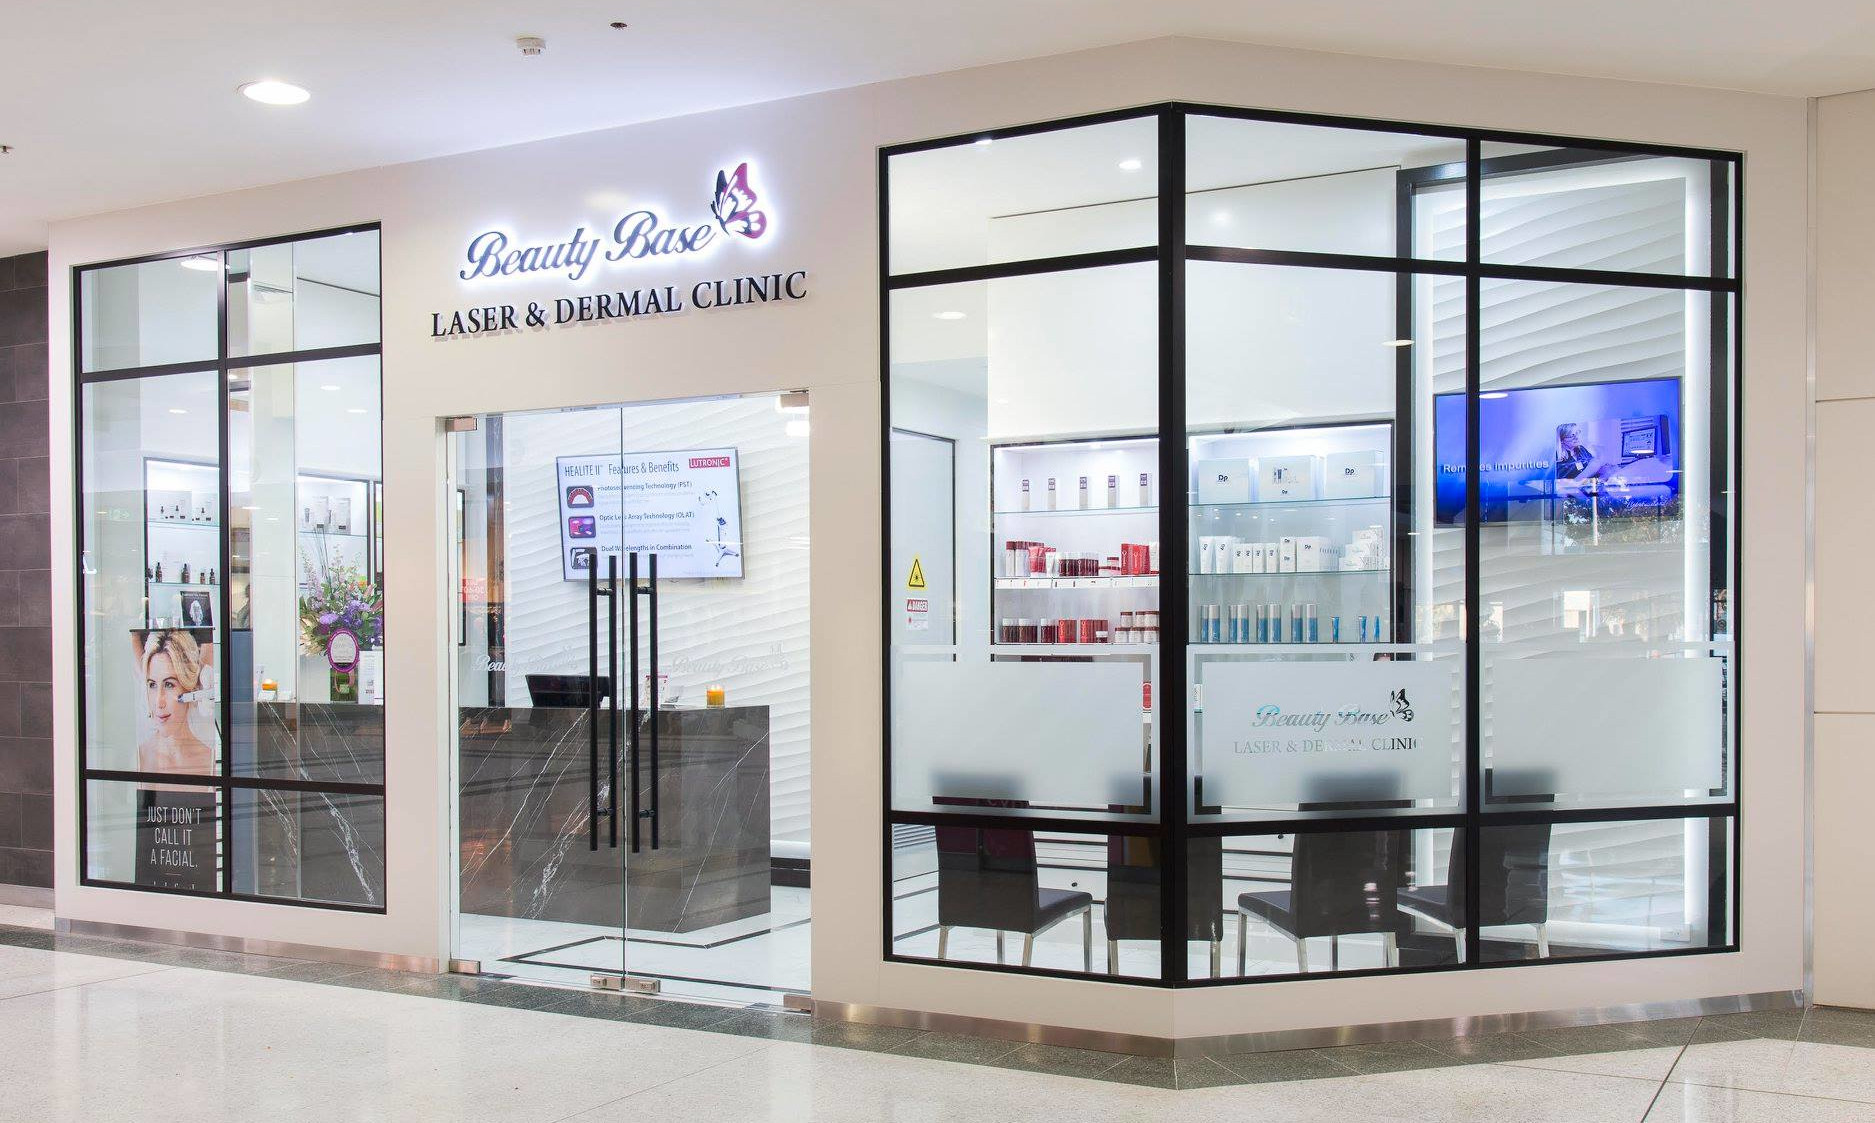 The Beauty Base Laser & Dermal Clinic